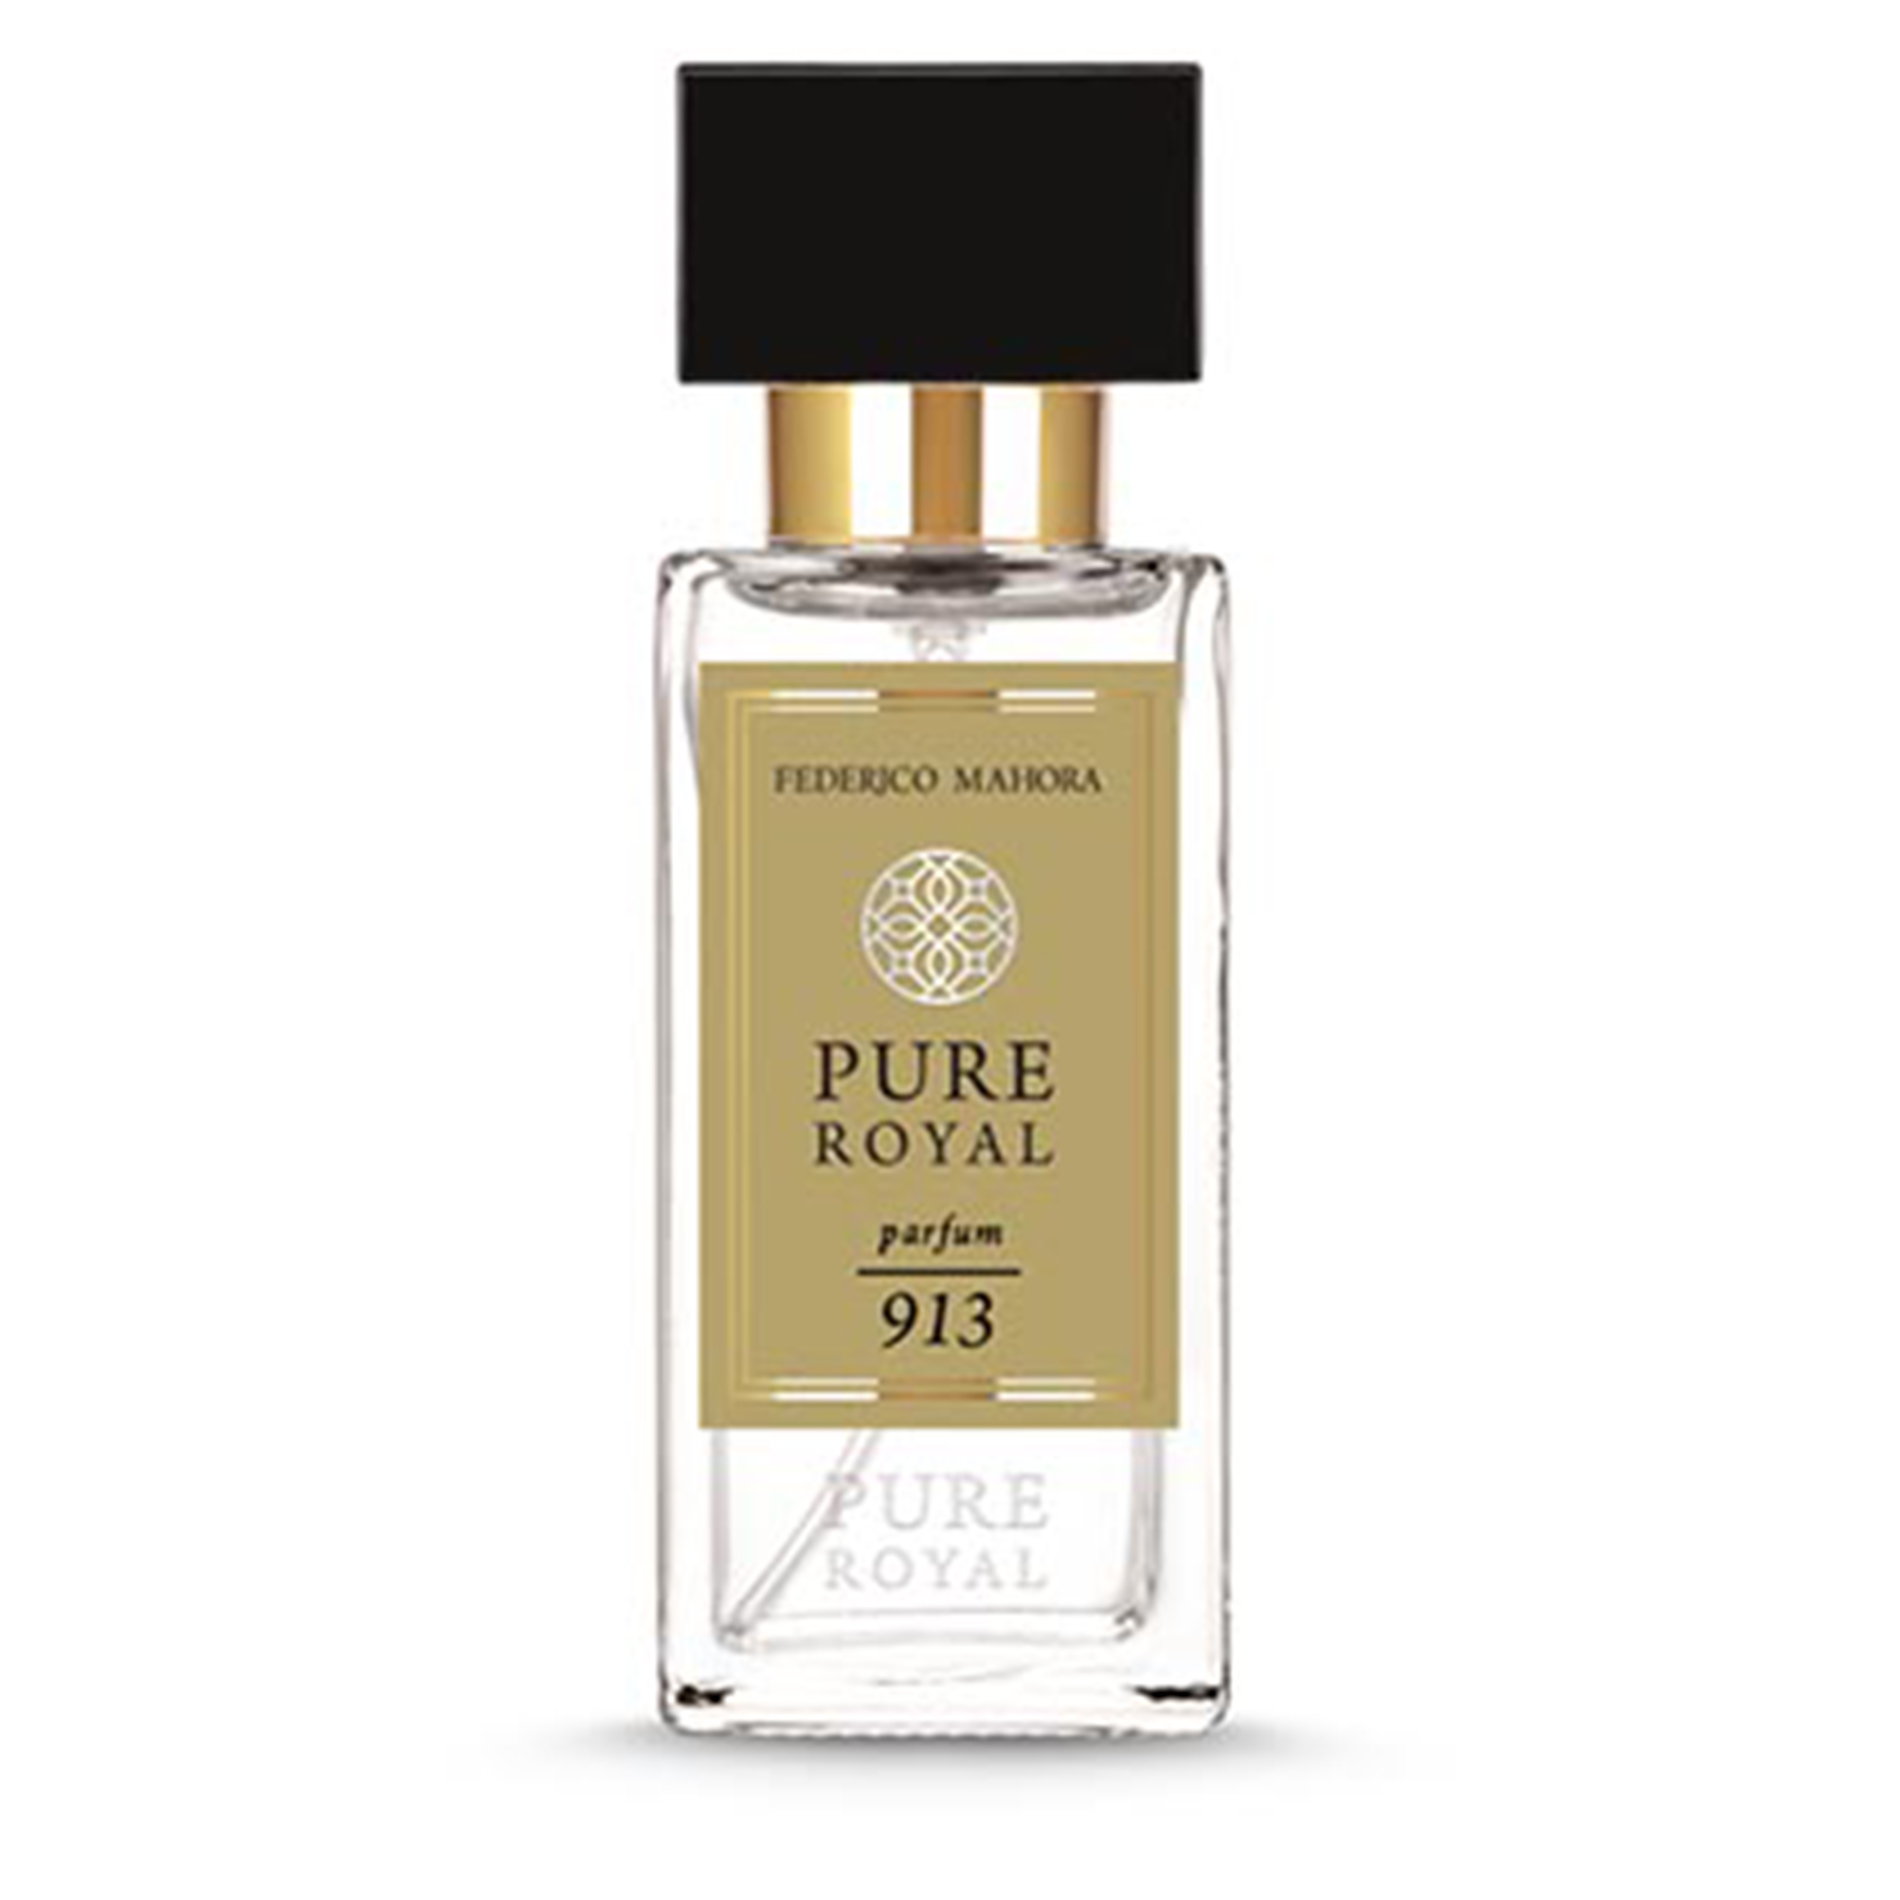 Pure Royal 913 Federico Mahora Parfum